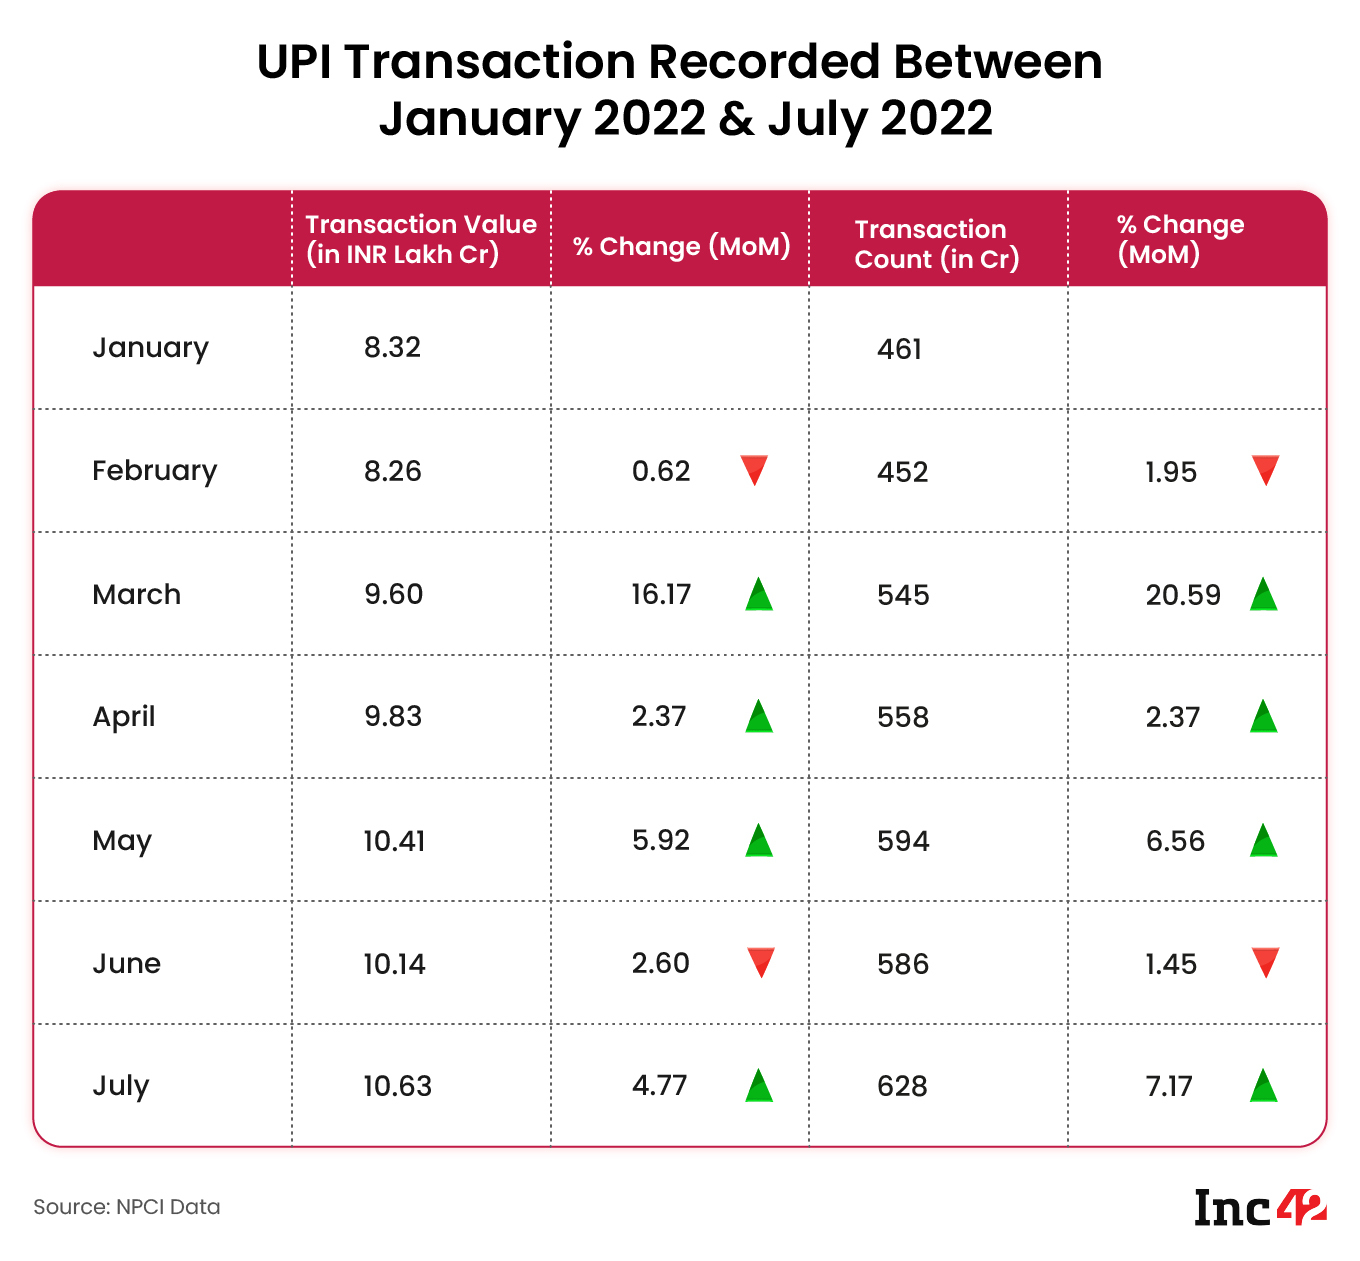 UPI Transactions Cross 6 Bn Mark In July 2022; Volume Up At INR 10.63 Lakh Cr